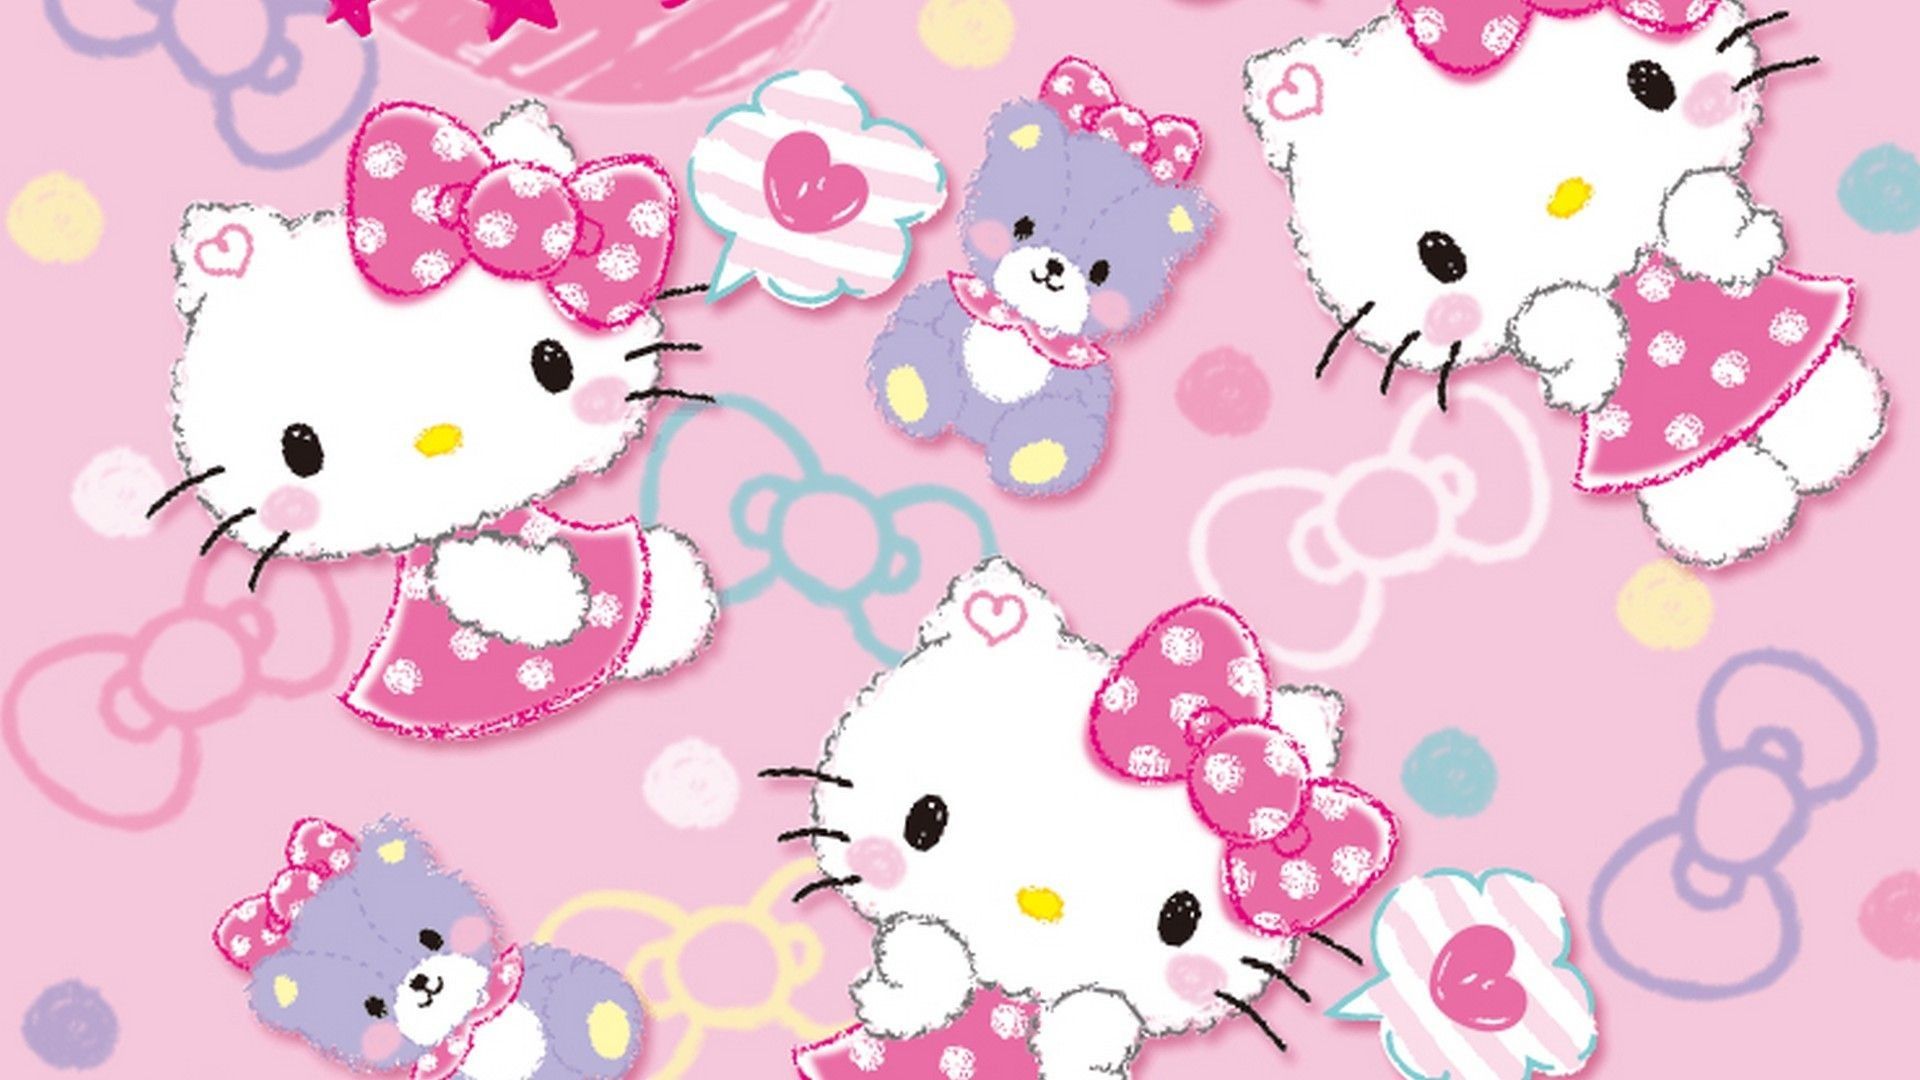 Hello Kitty Laptop Wallpapers